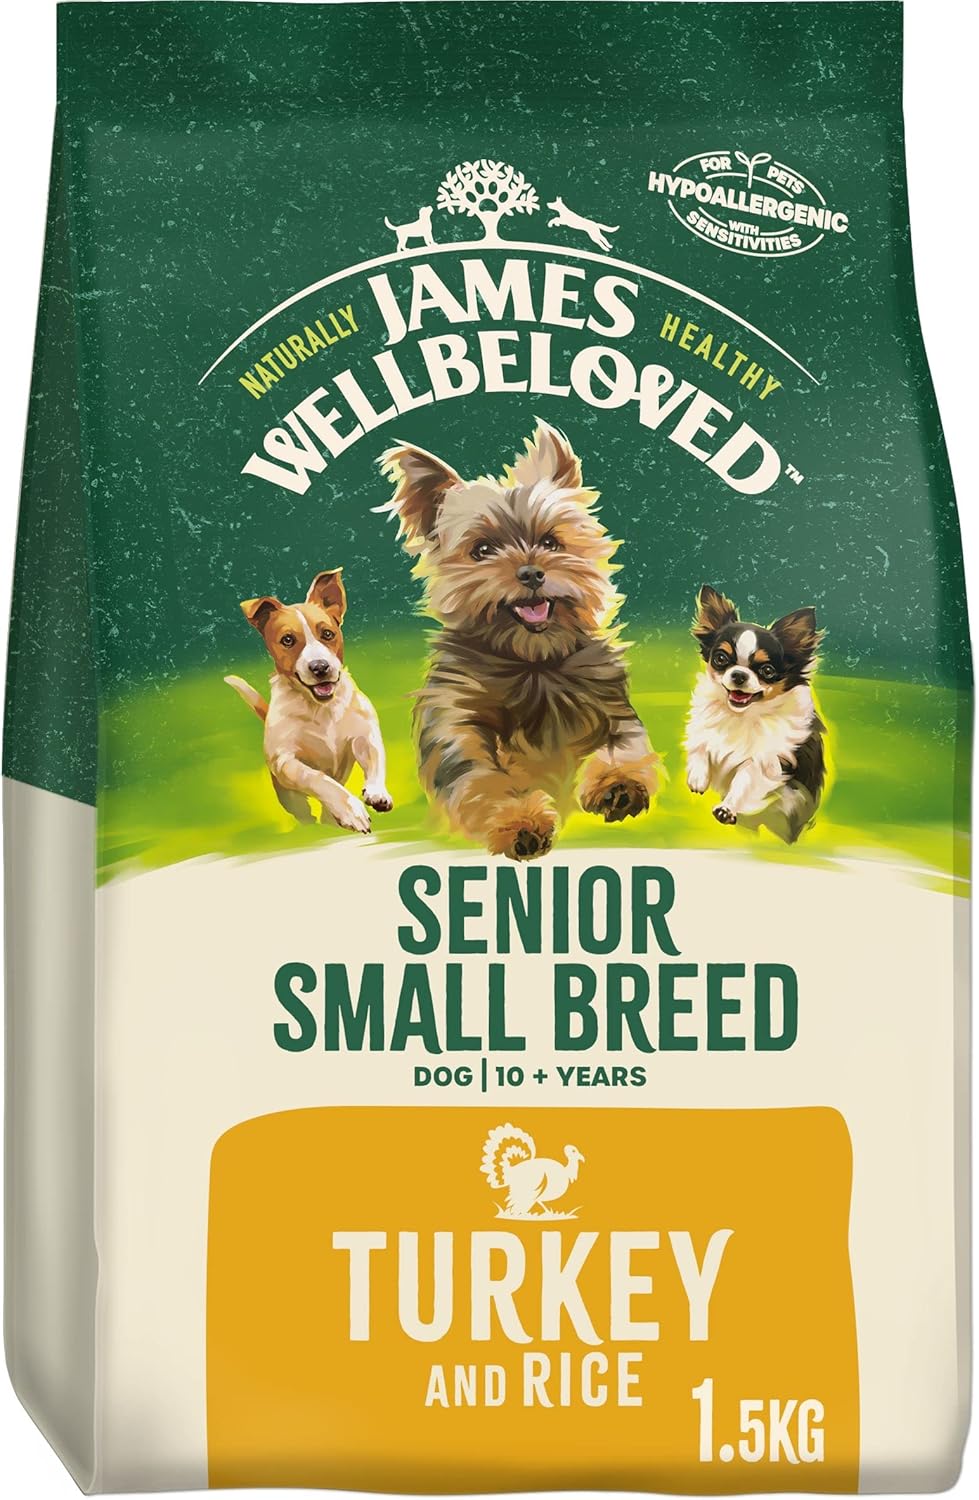 James Wellbeloved Senior Small Breed Turkey & Rice 1.5 kg Bag, Hypoallergenic Dry Dog Food?401751